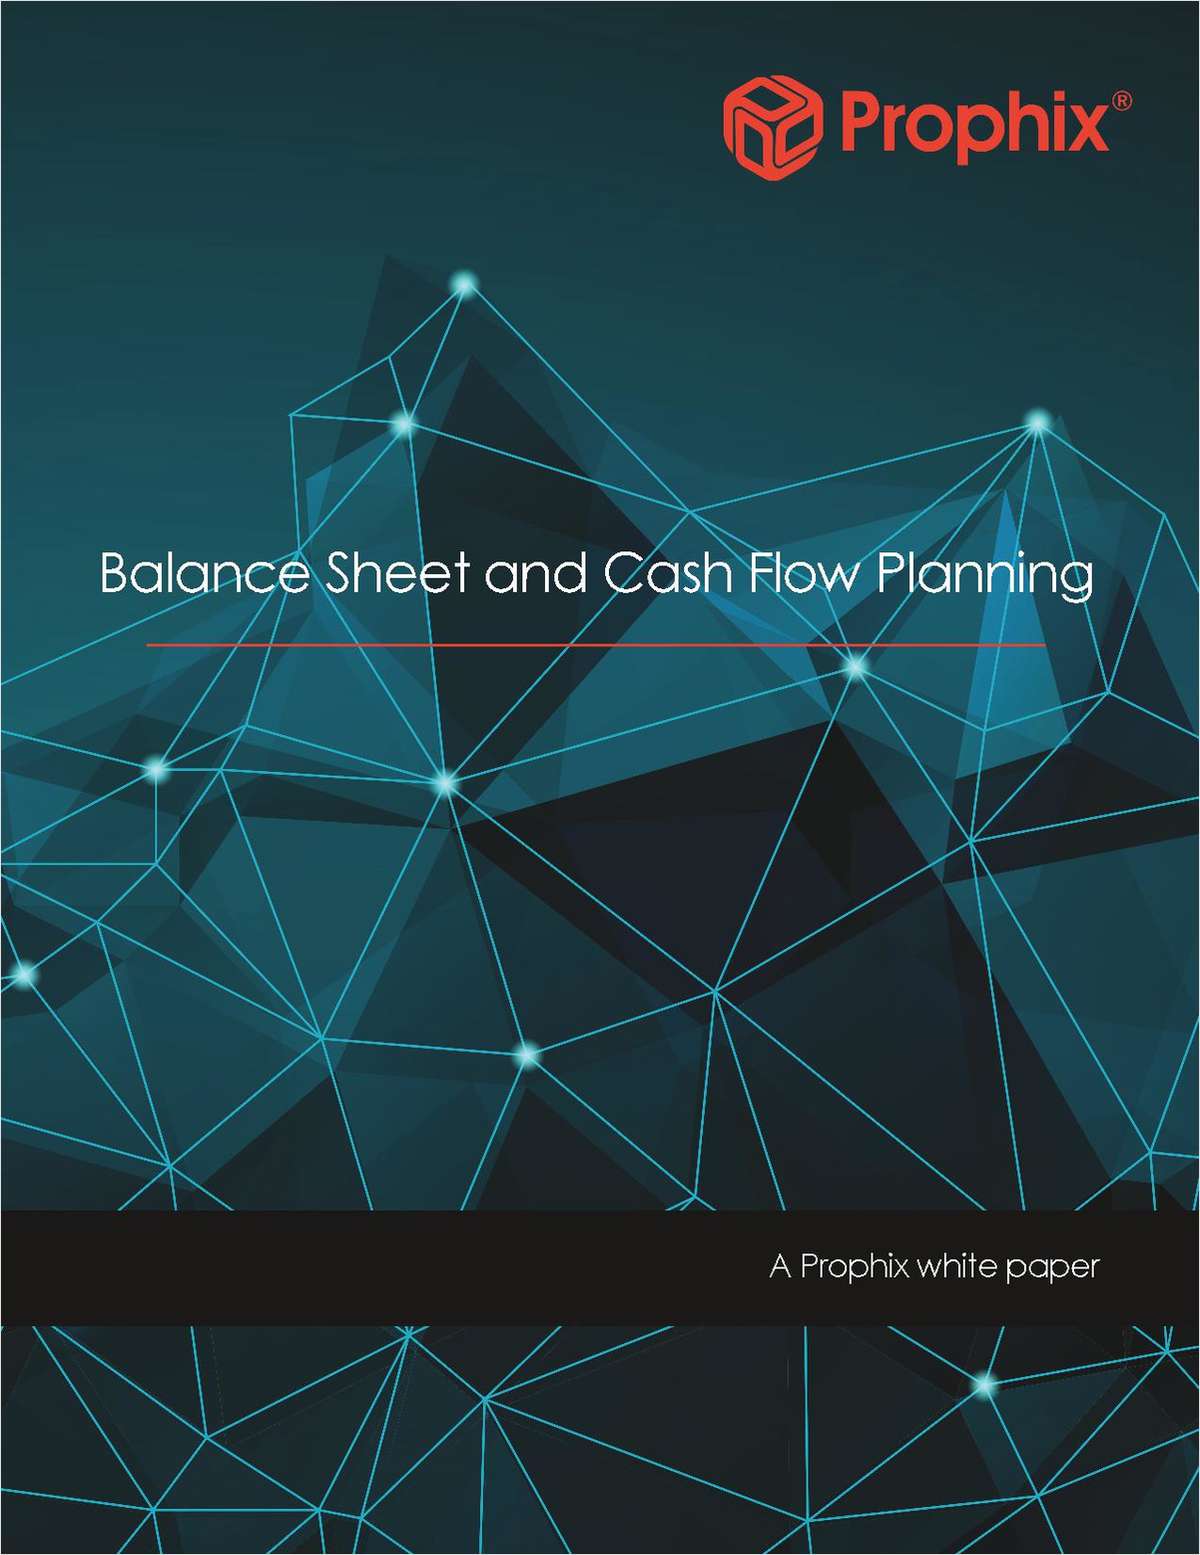 Balance Sheet and Cash Flow Planning